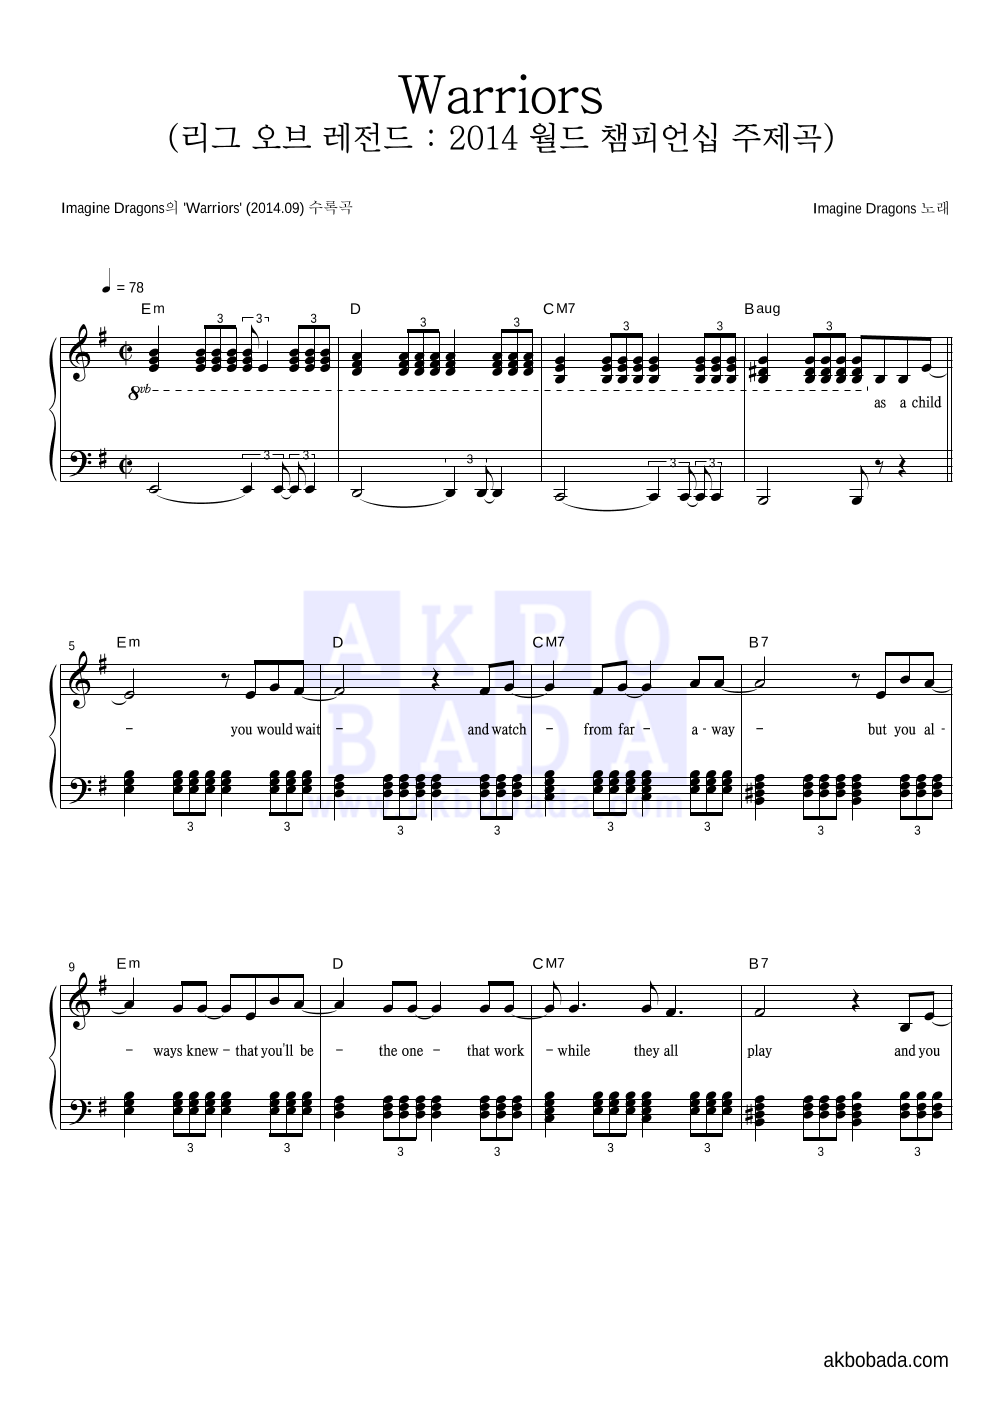 Imagine Dragons - Warriors (리그 오브 레전드 : 2014 월드 챔피언십 주제곡) 피아노 2단 악보 